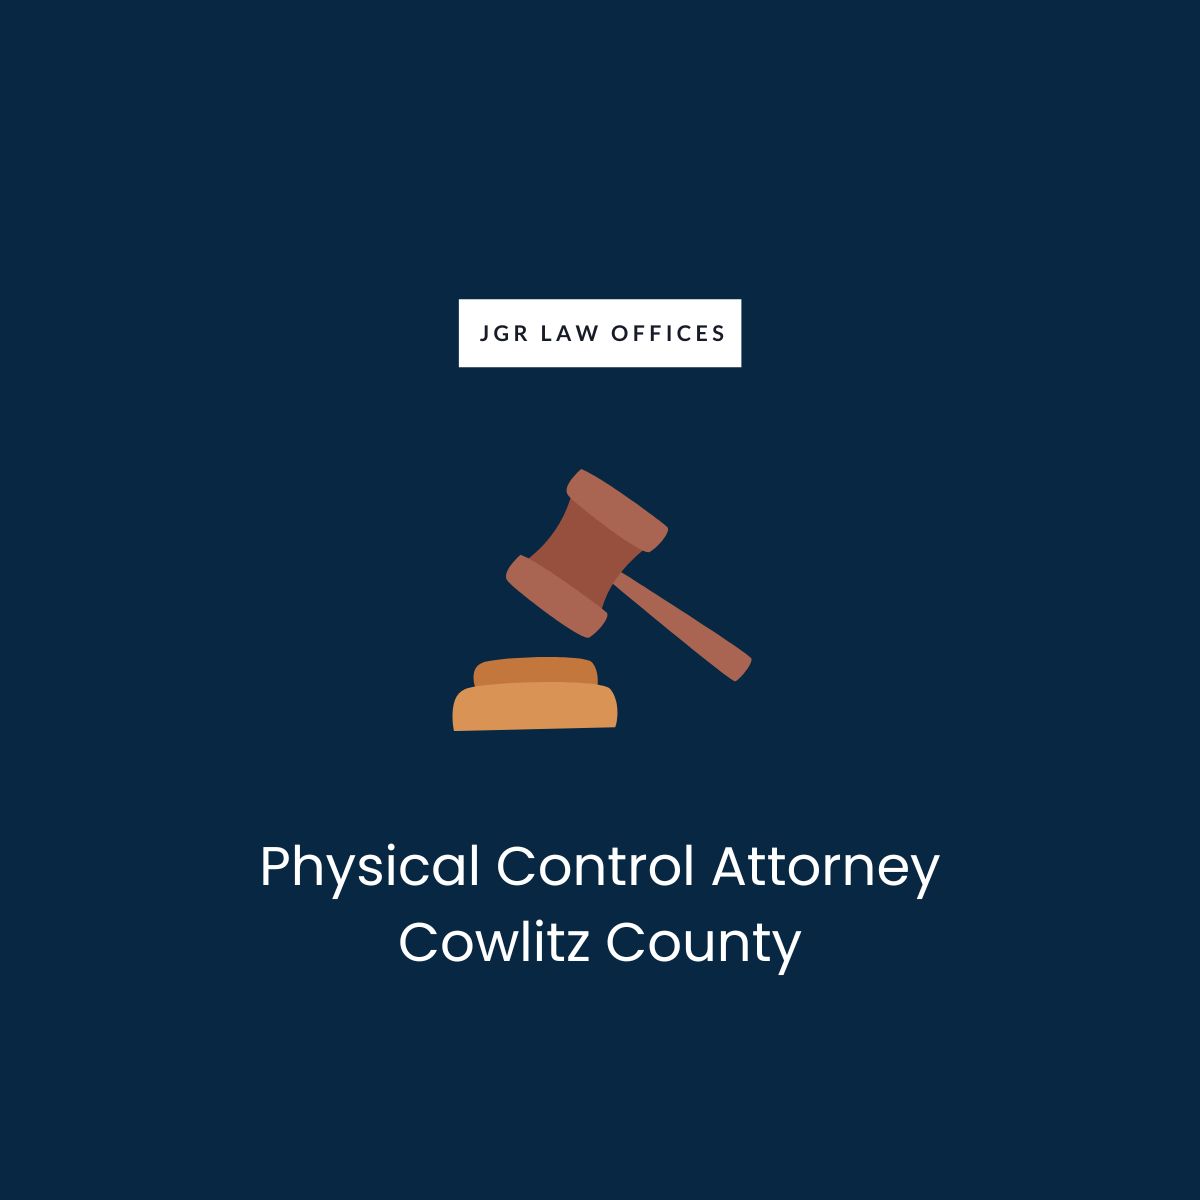 Physical Control Attorney Cowlitz County Physical Control